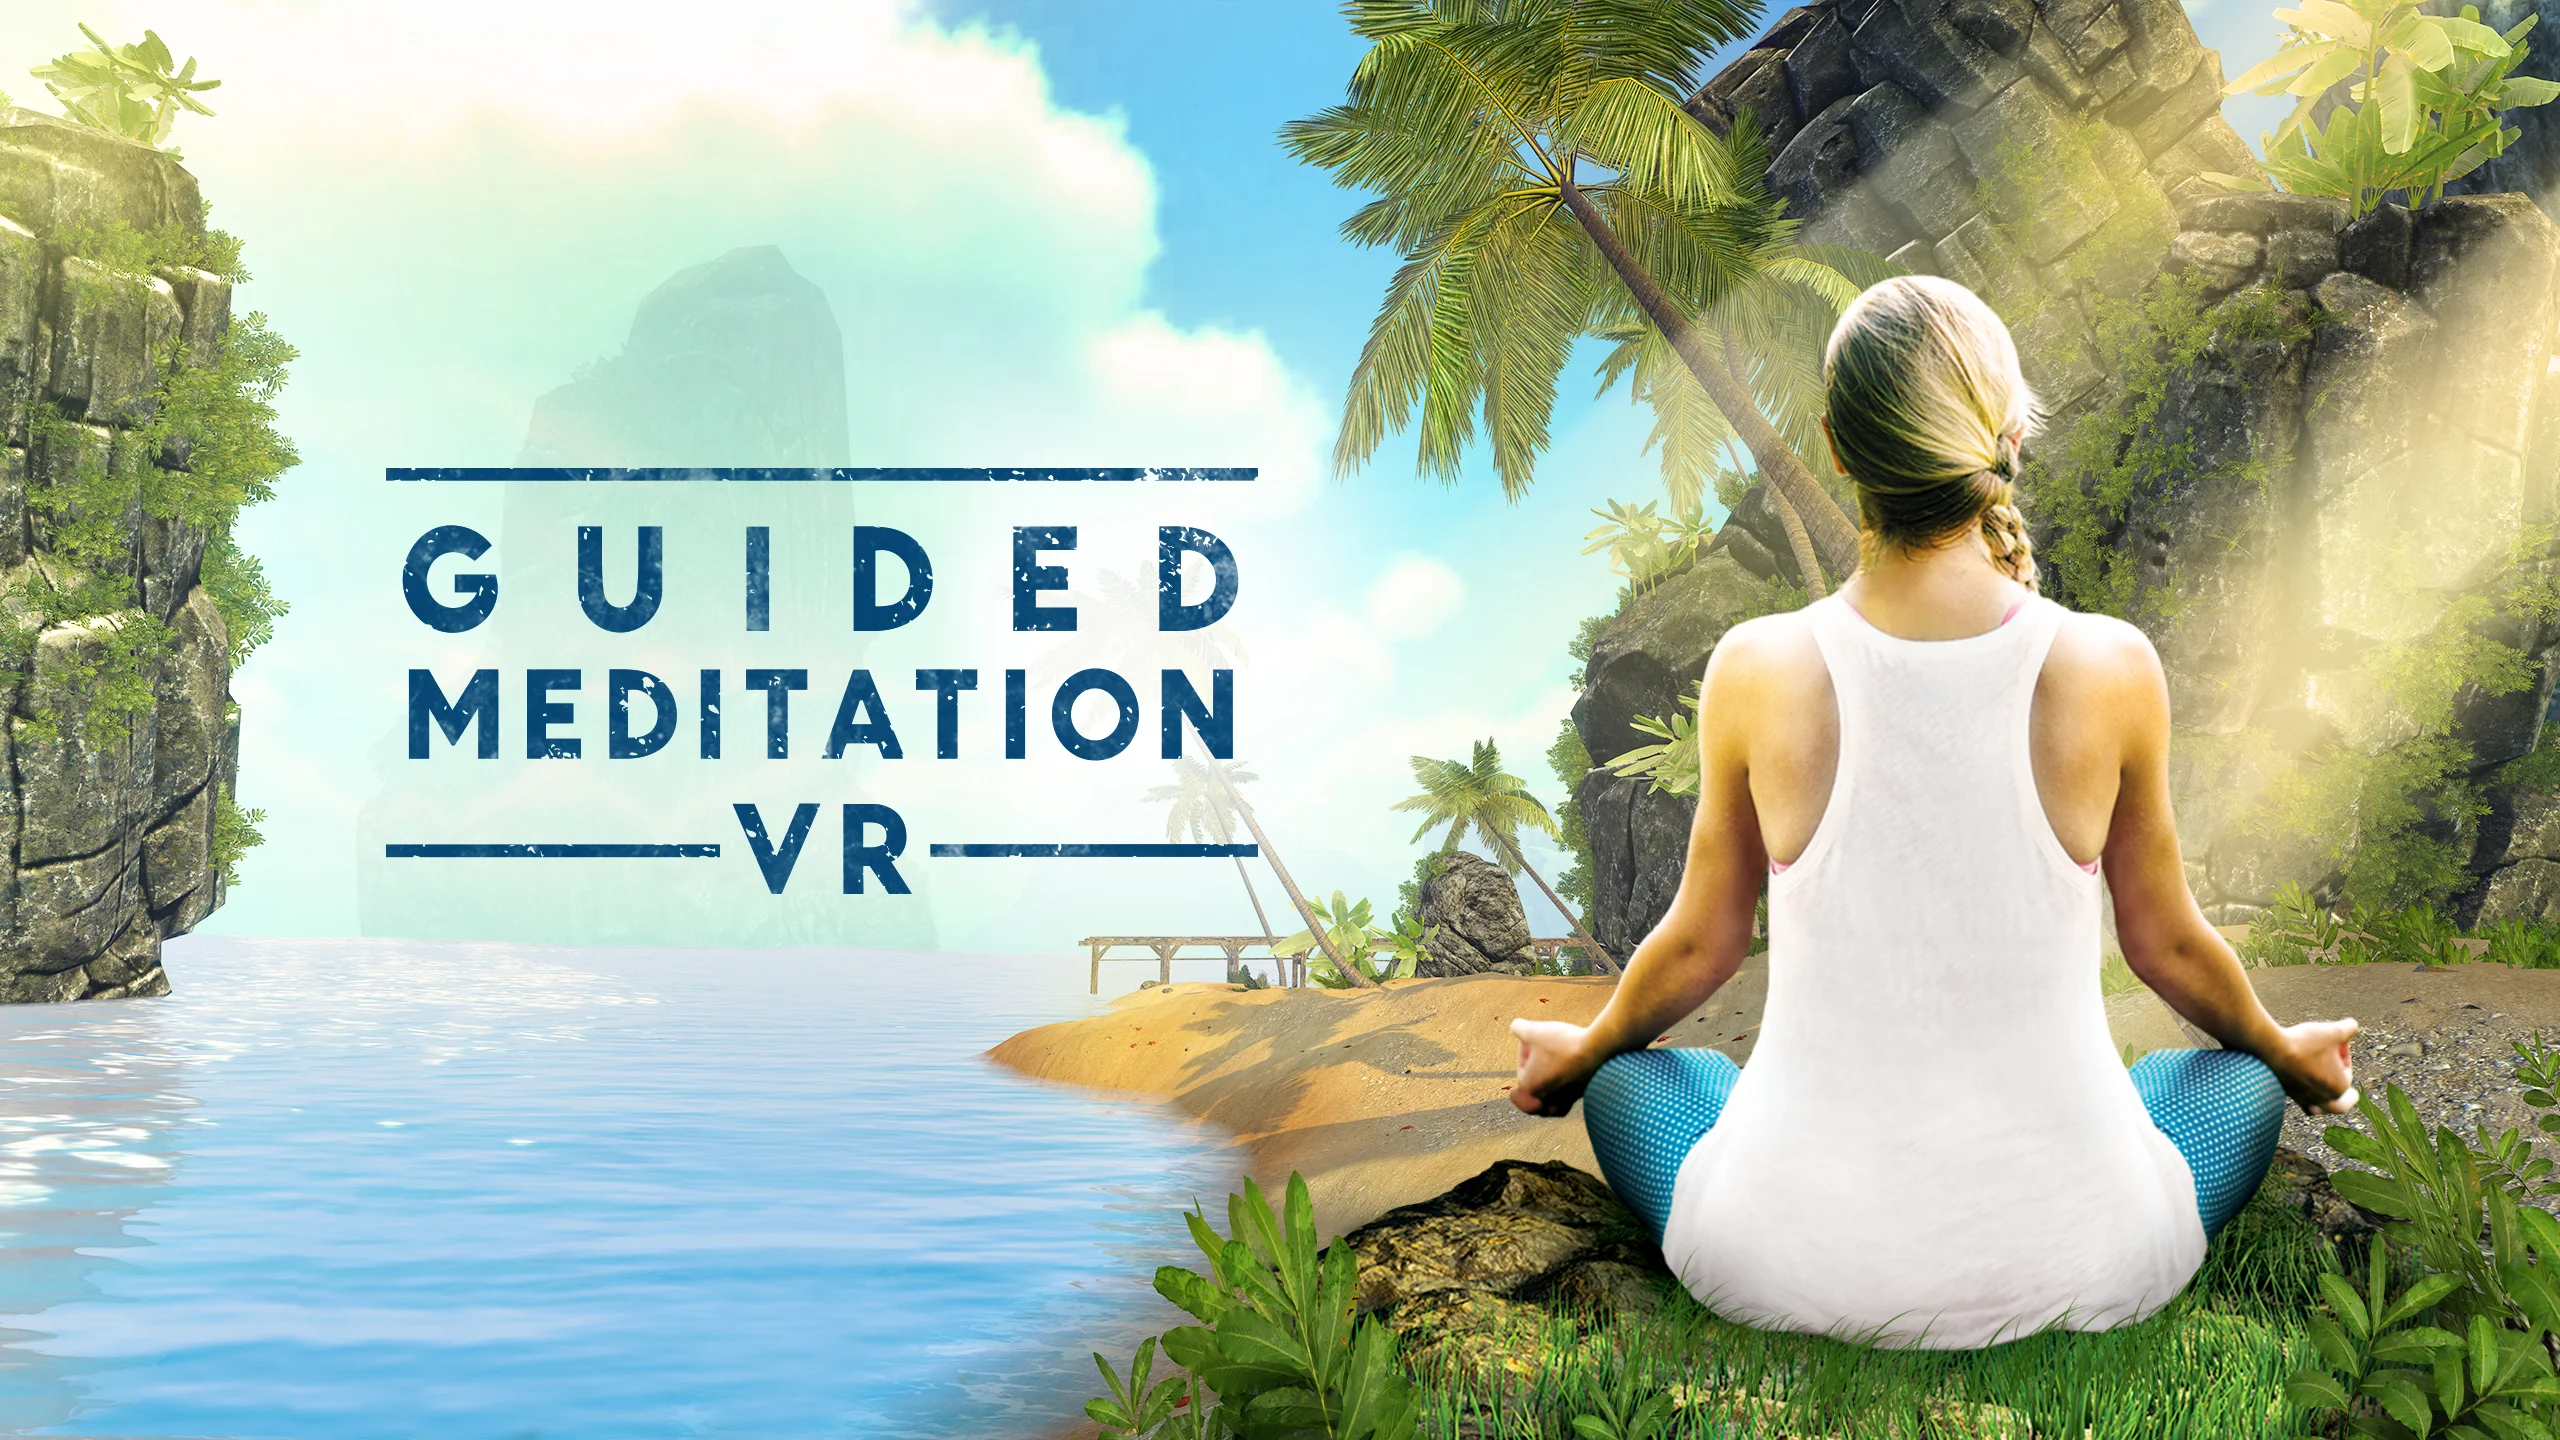 Guided meditation. Виртуальная медитация. VR Meditation. Guided Meditation VR логотип.